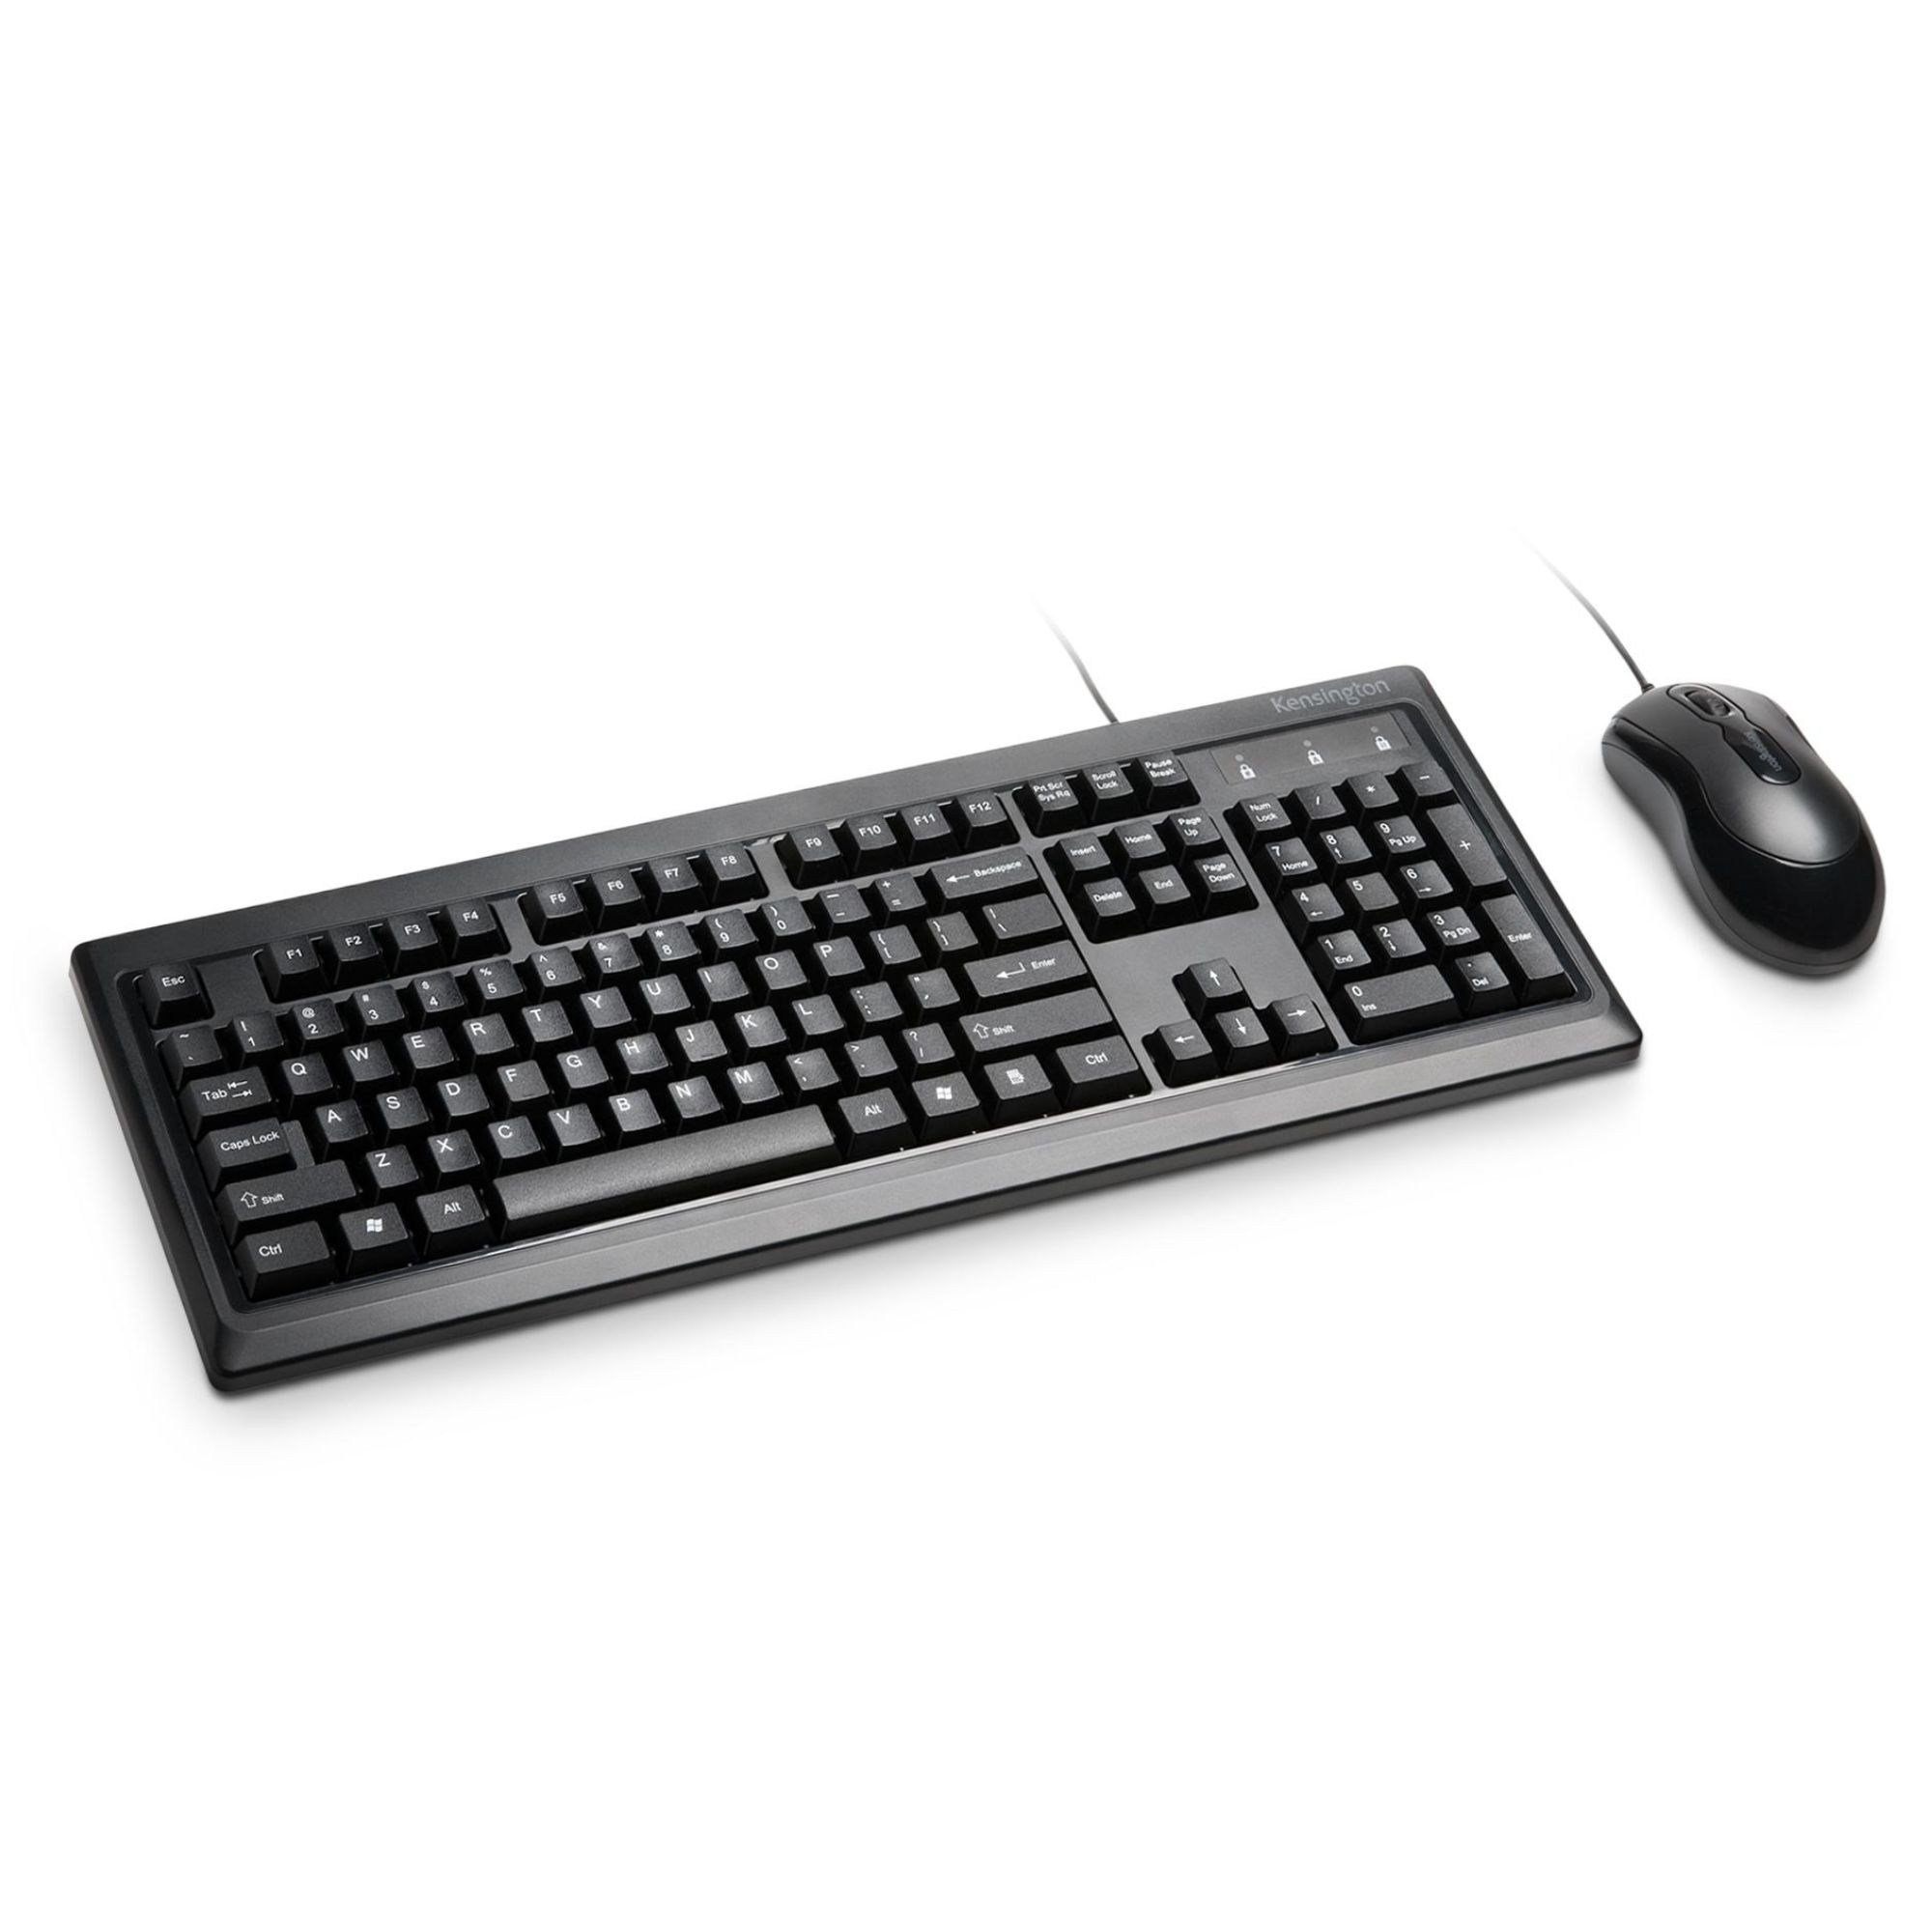 Kensington K72436AM Keyboard for Life Desktop Set with Mouse [Wired USB]